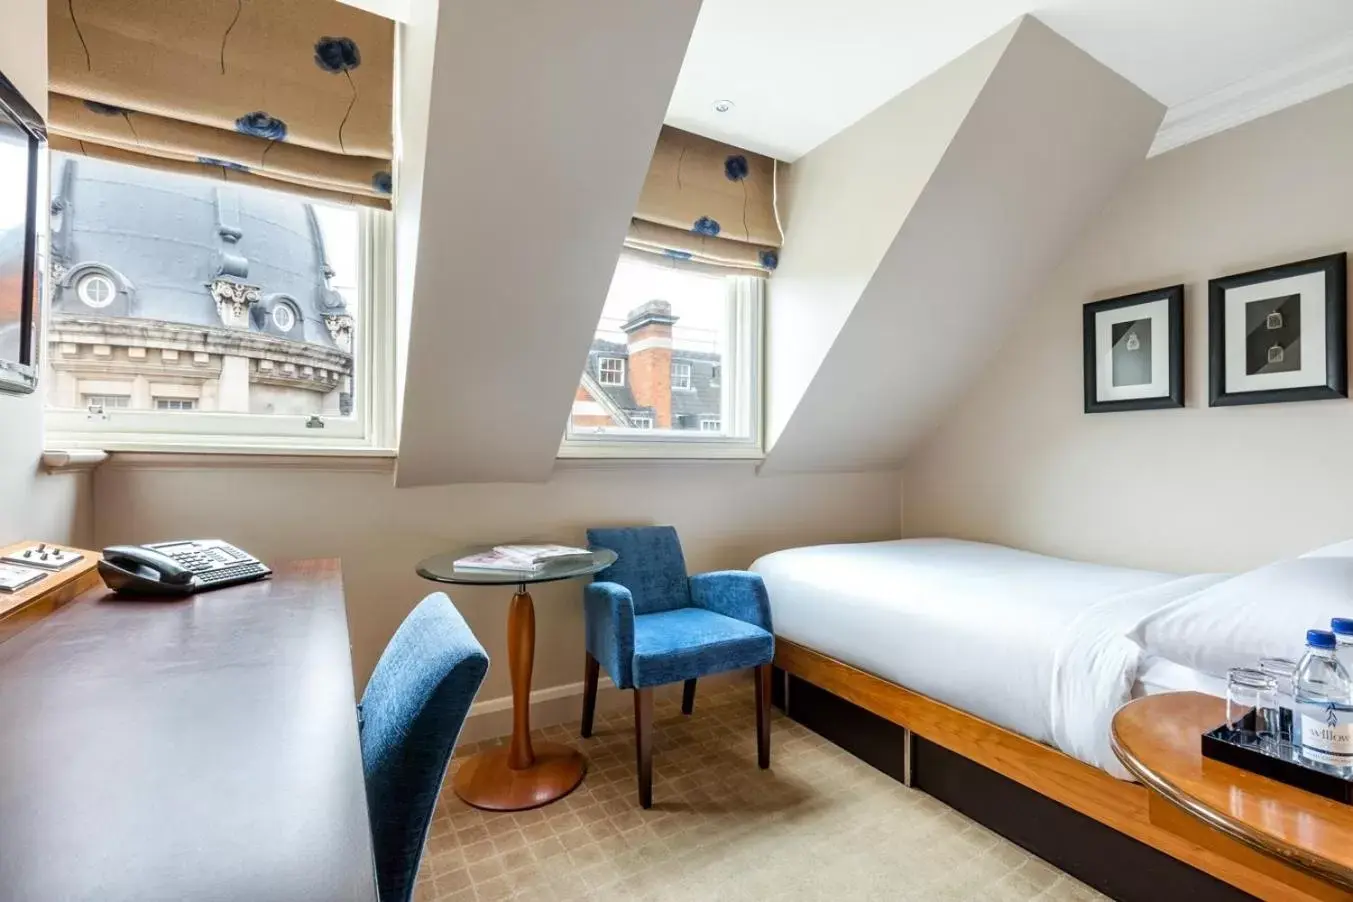 Bedroom in Radisson Blu Edwardian Kenilworth Hotel, London